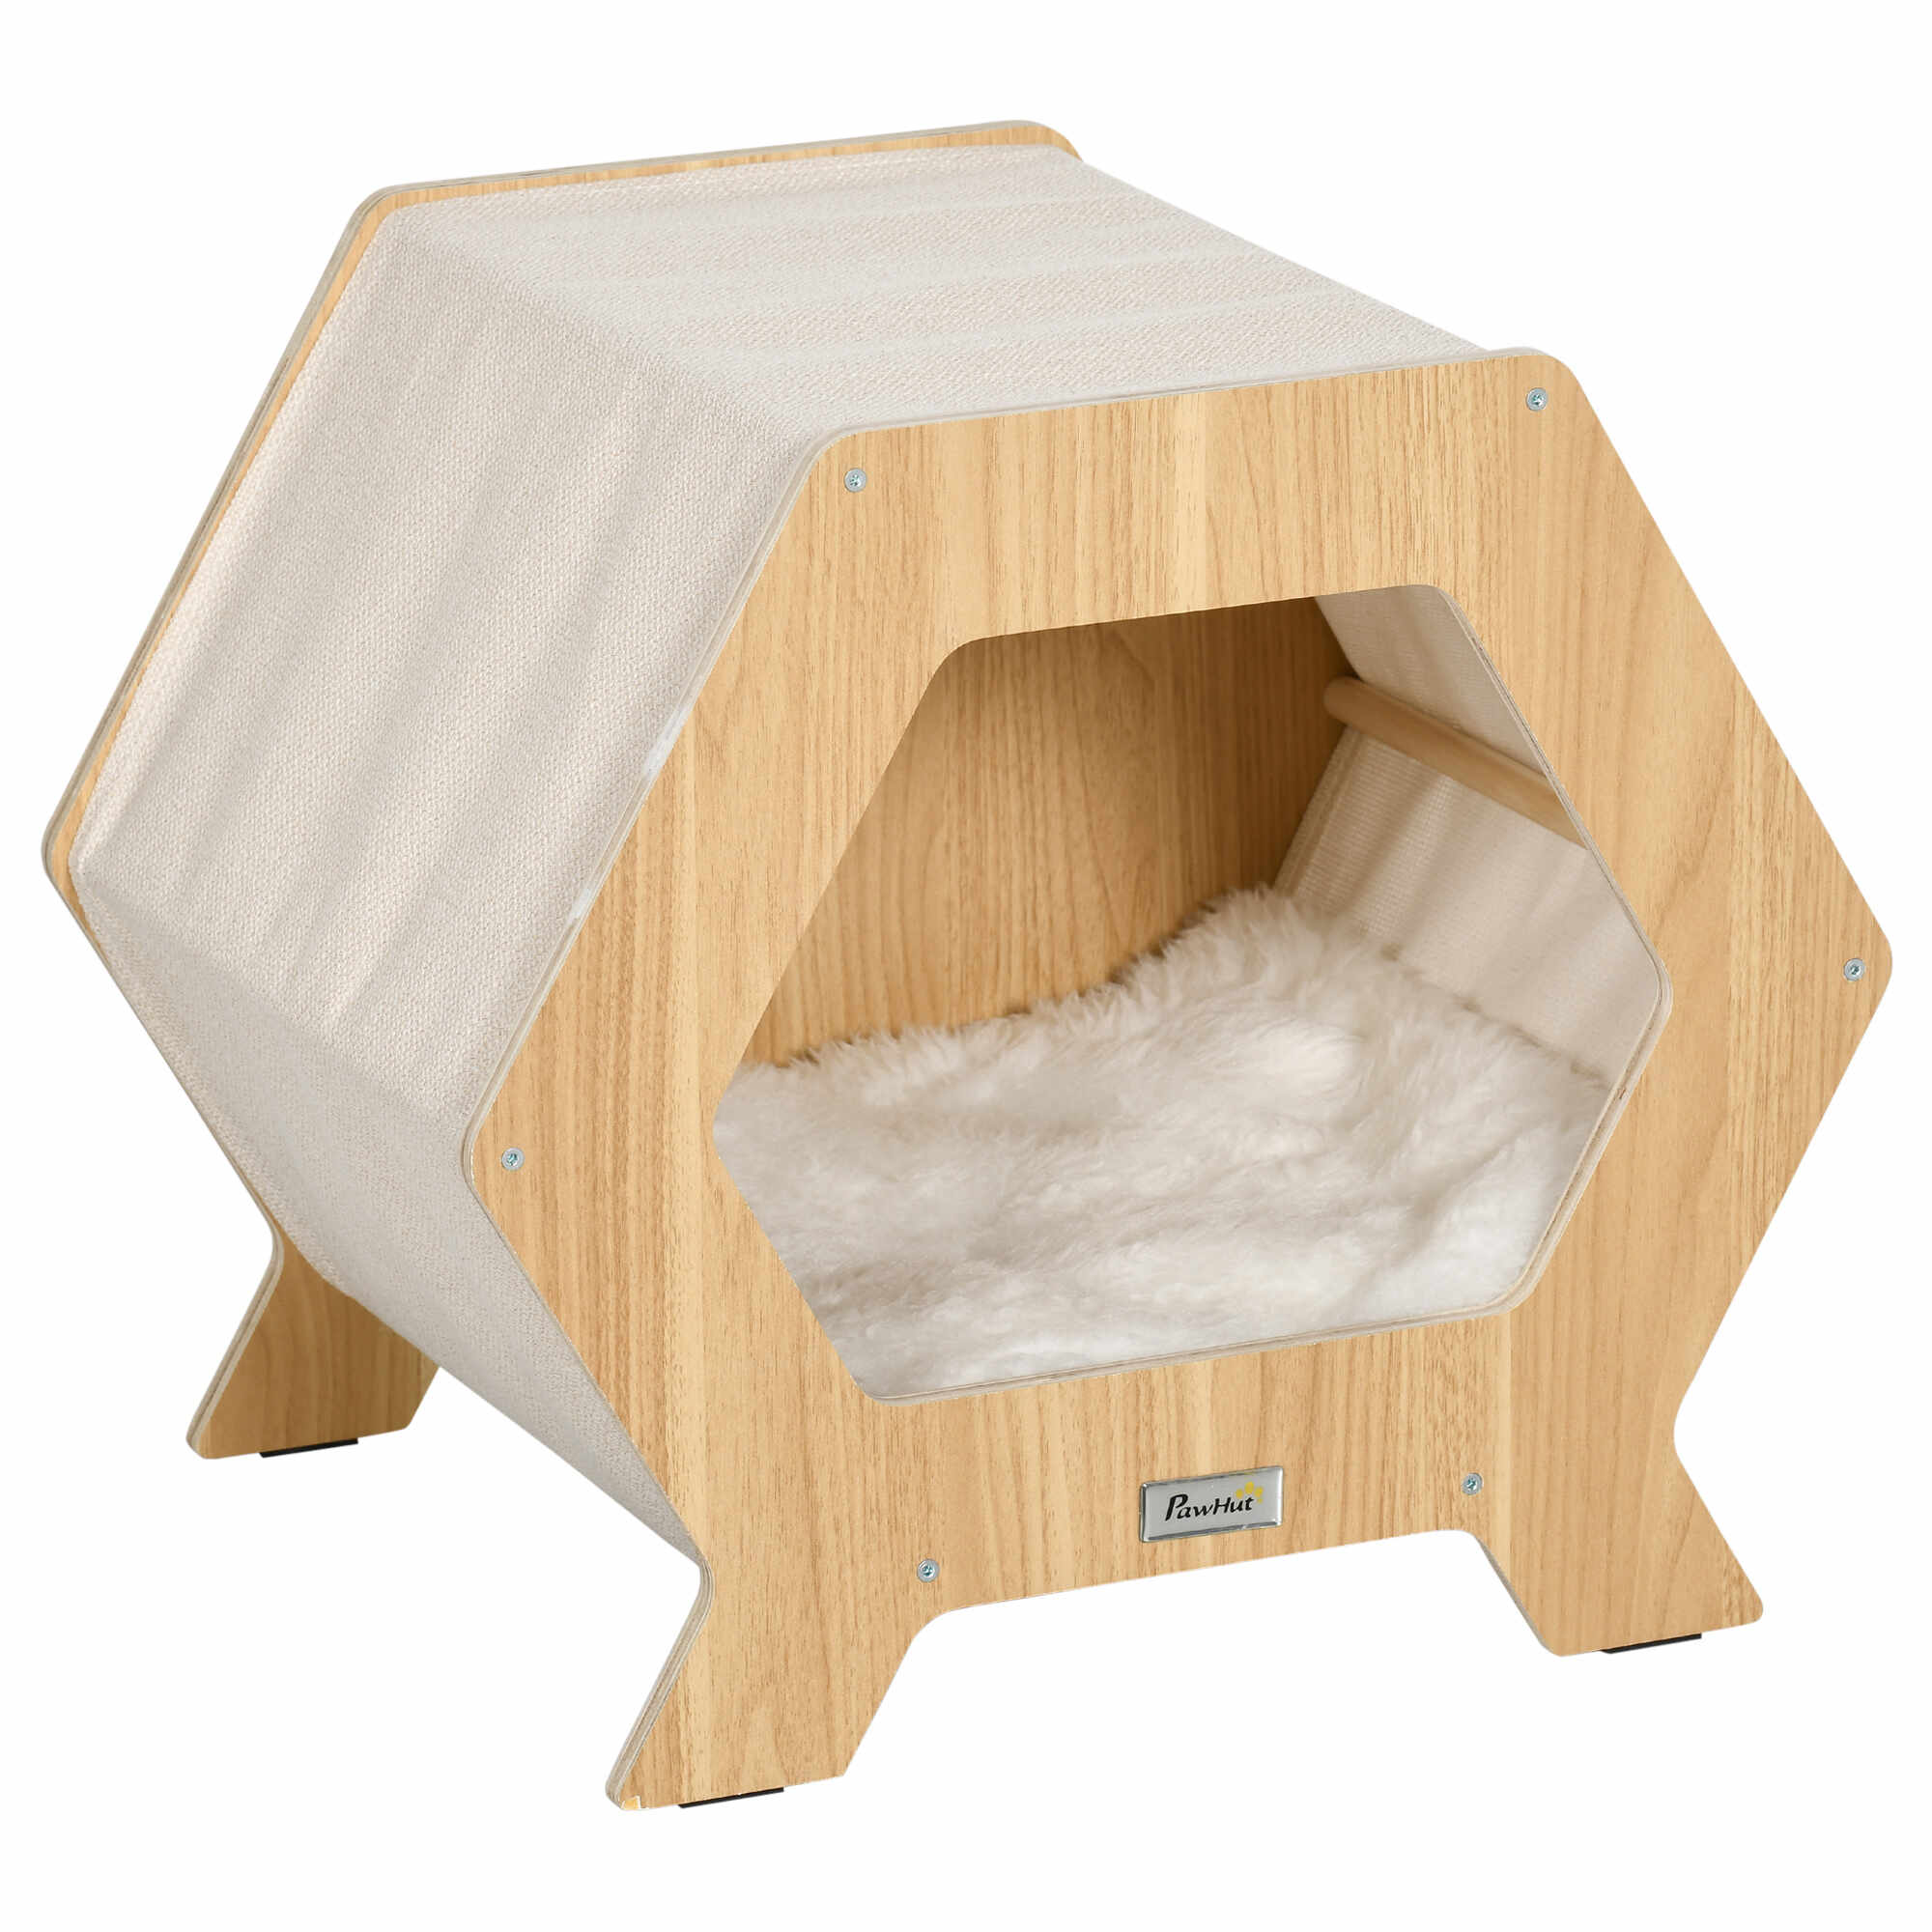 PawHut Casa moderna pentru pisici , pat inaltat pentru pisici, adapost pentru pisici de interior, cu perna moale | AOSOM RO